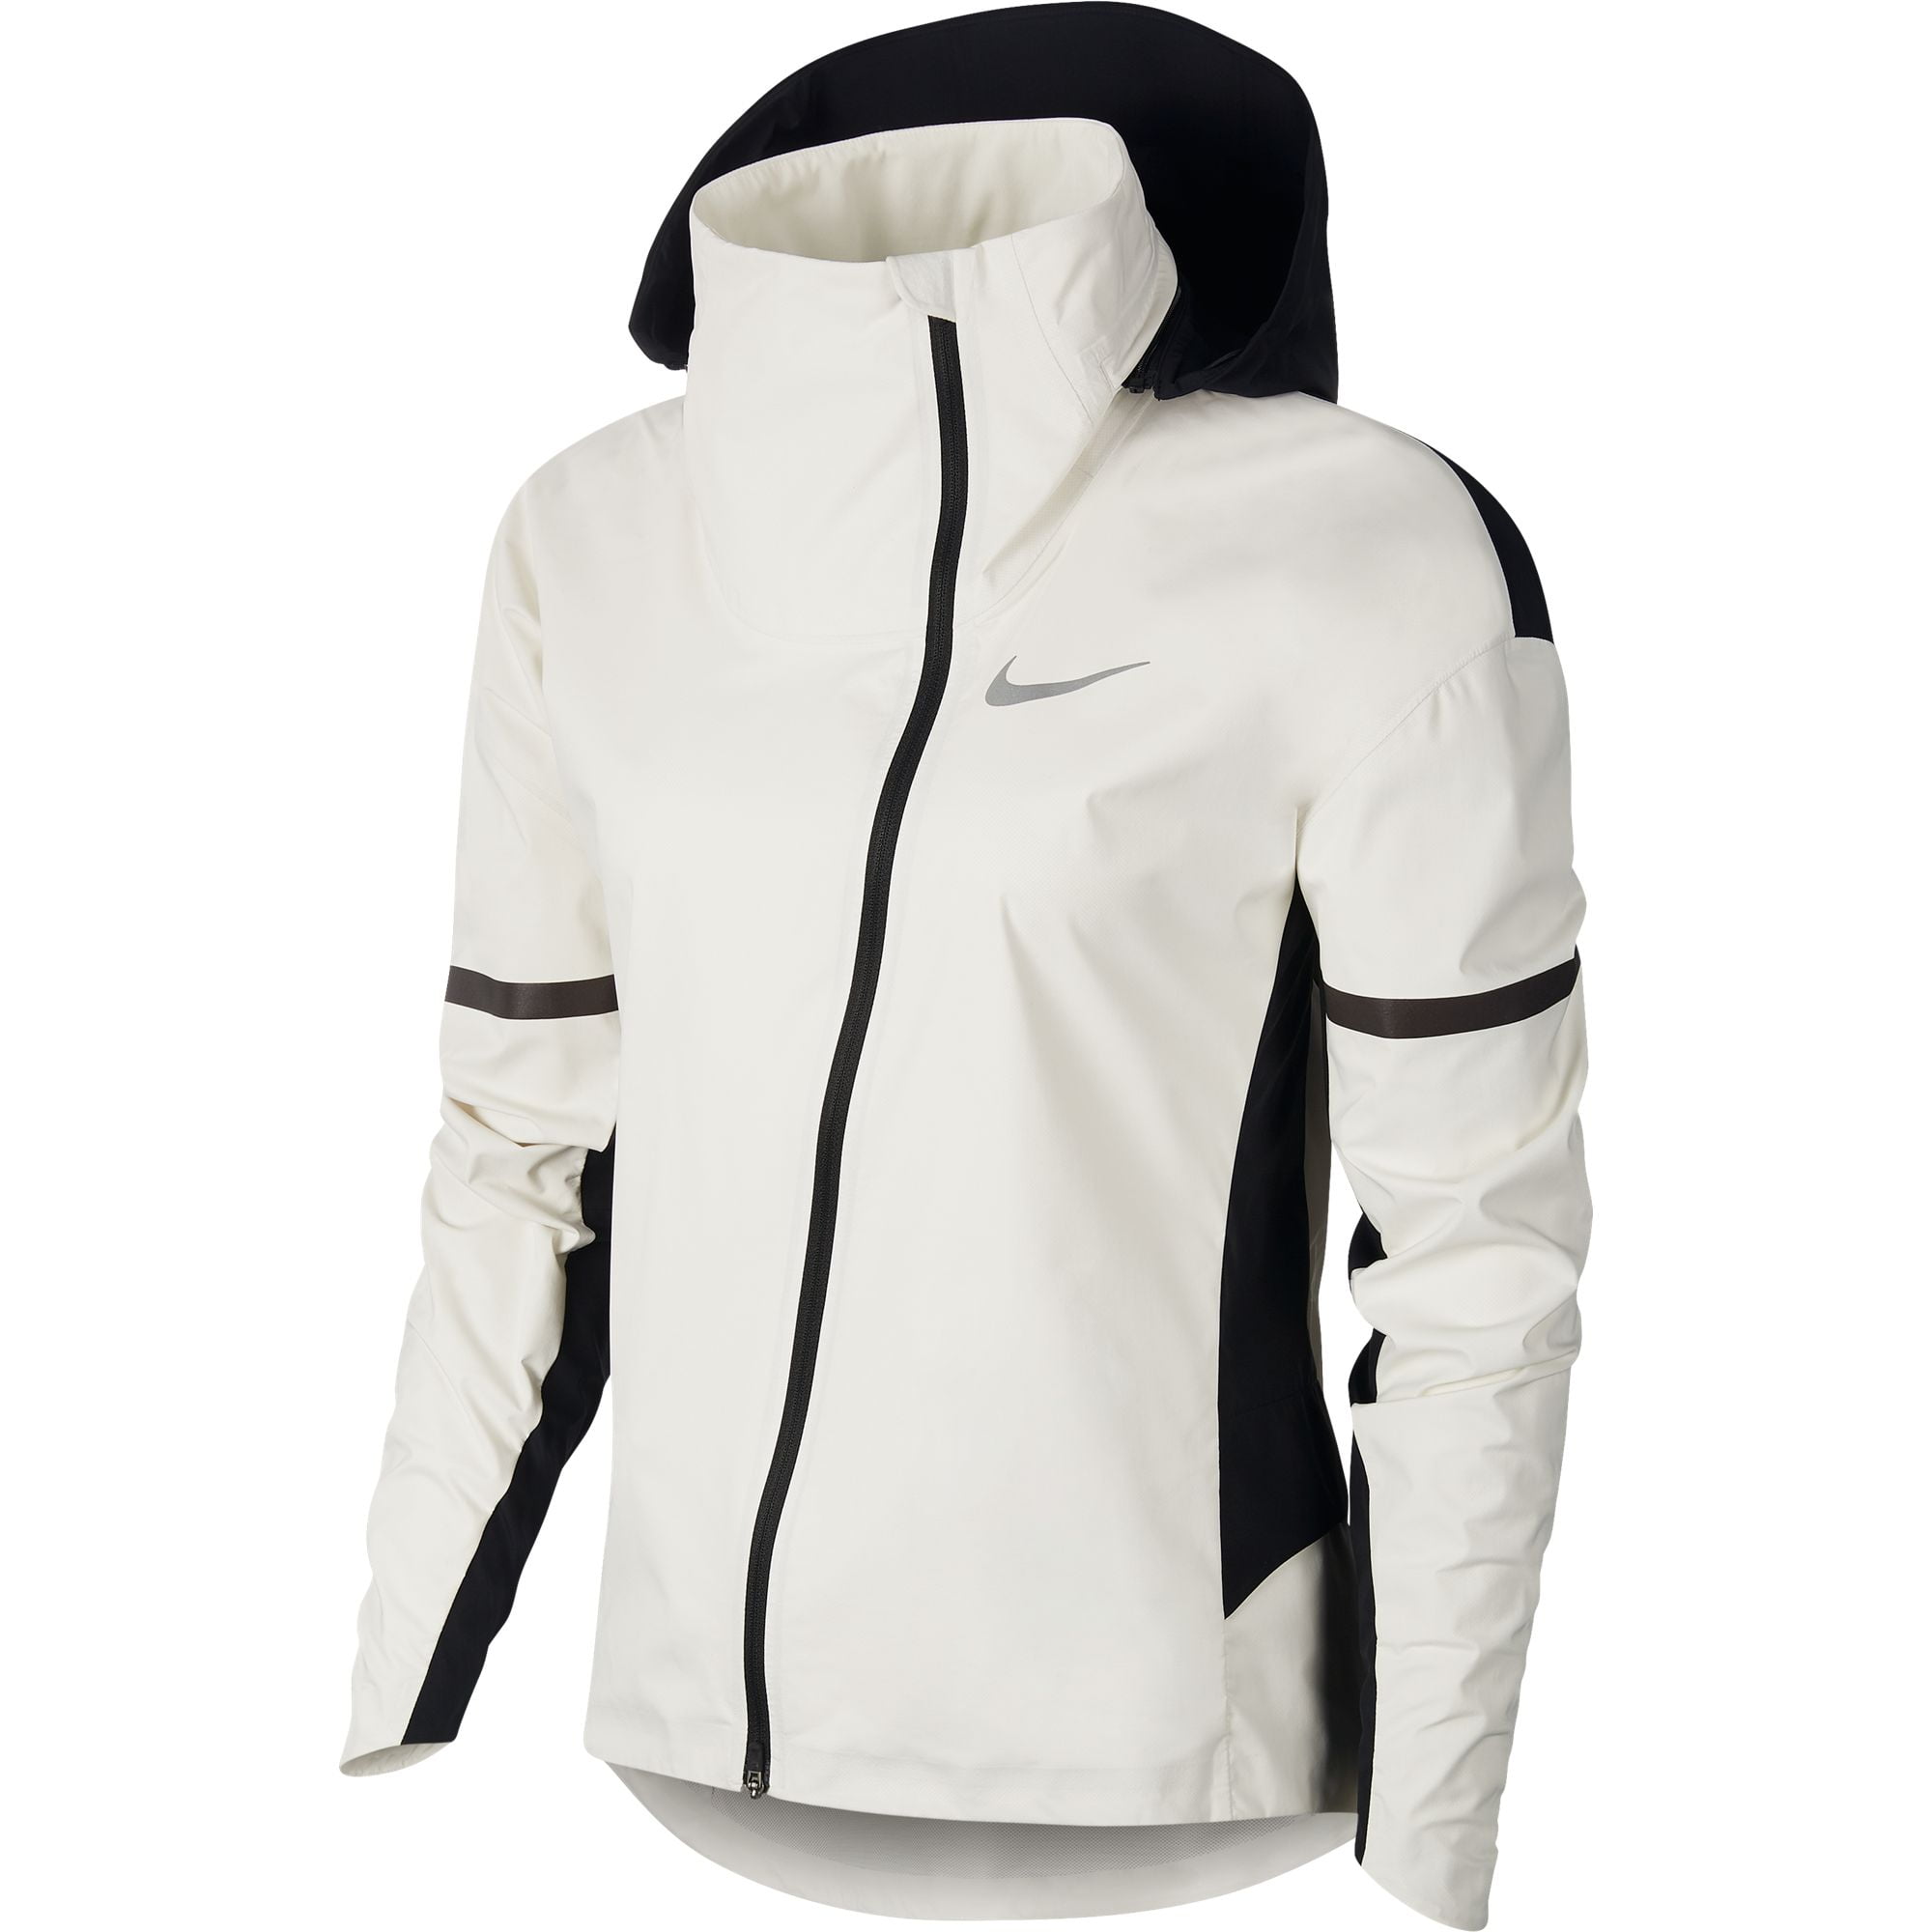 nike women's hooded running jacket